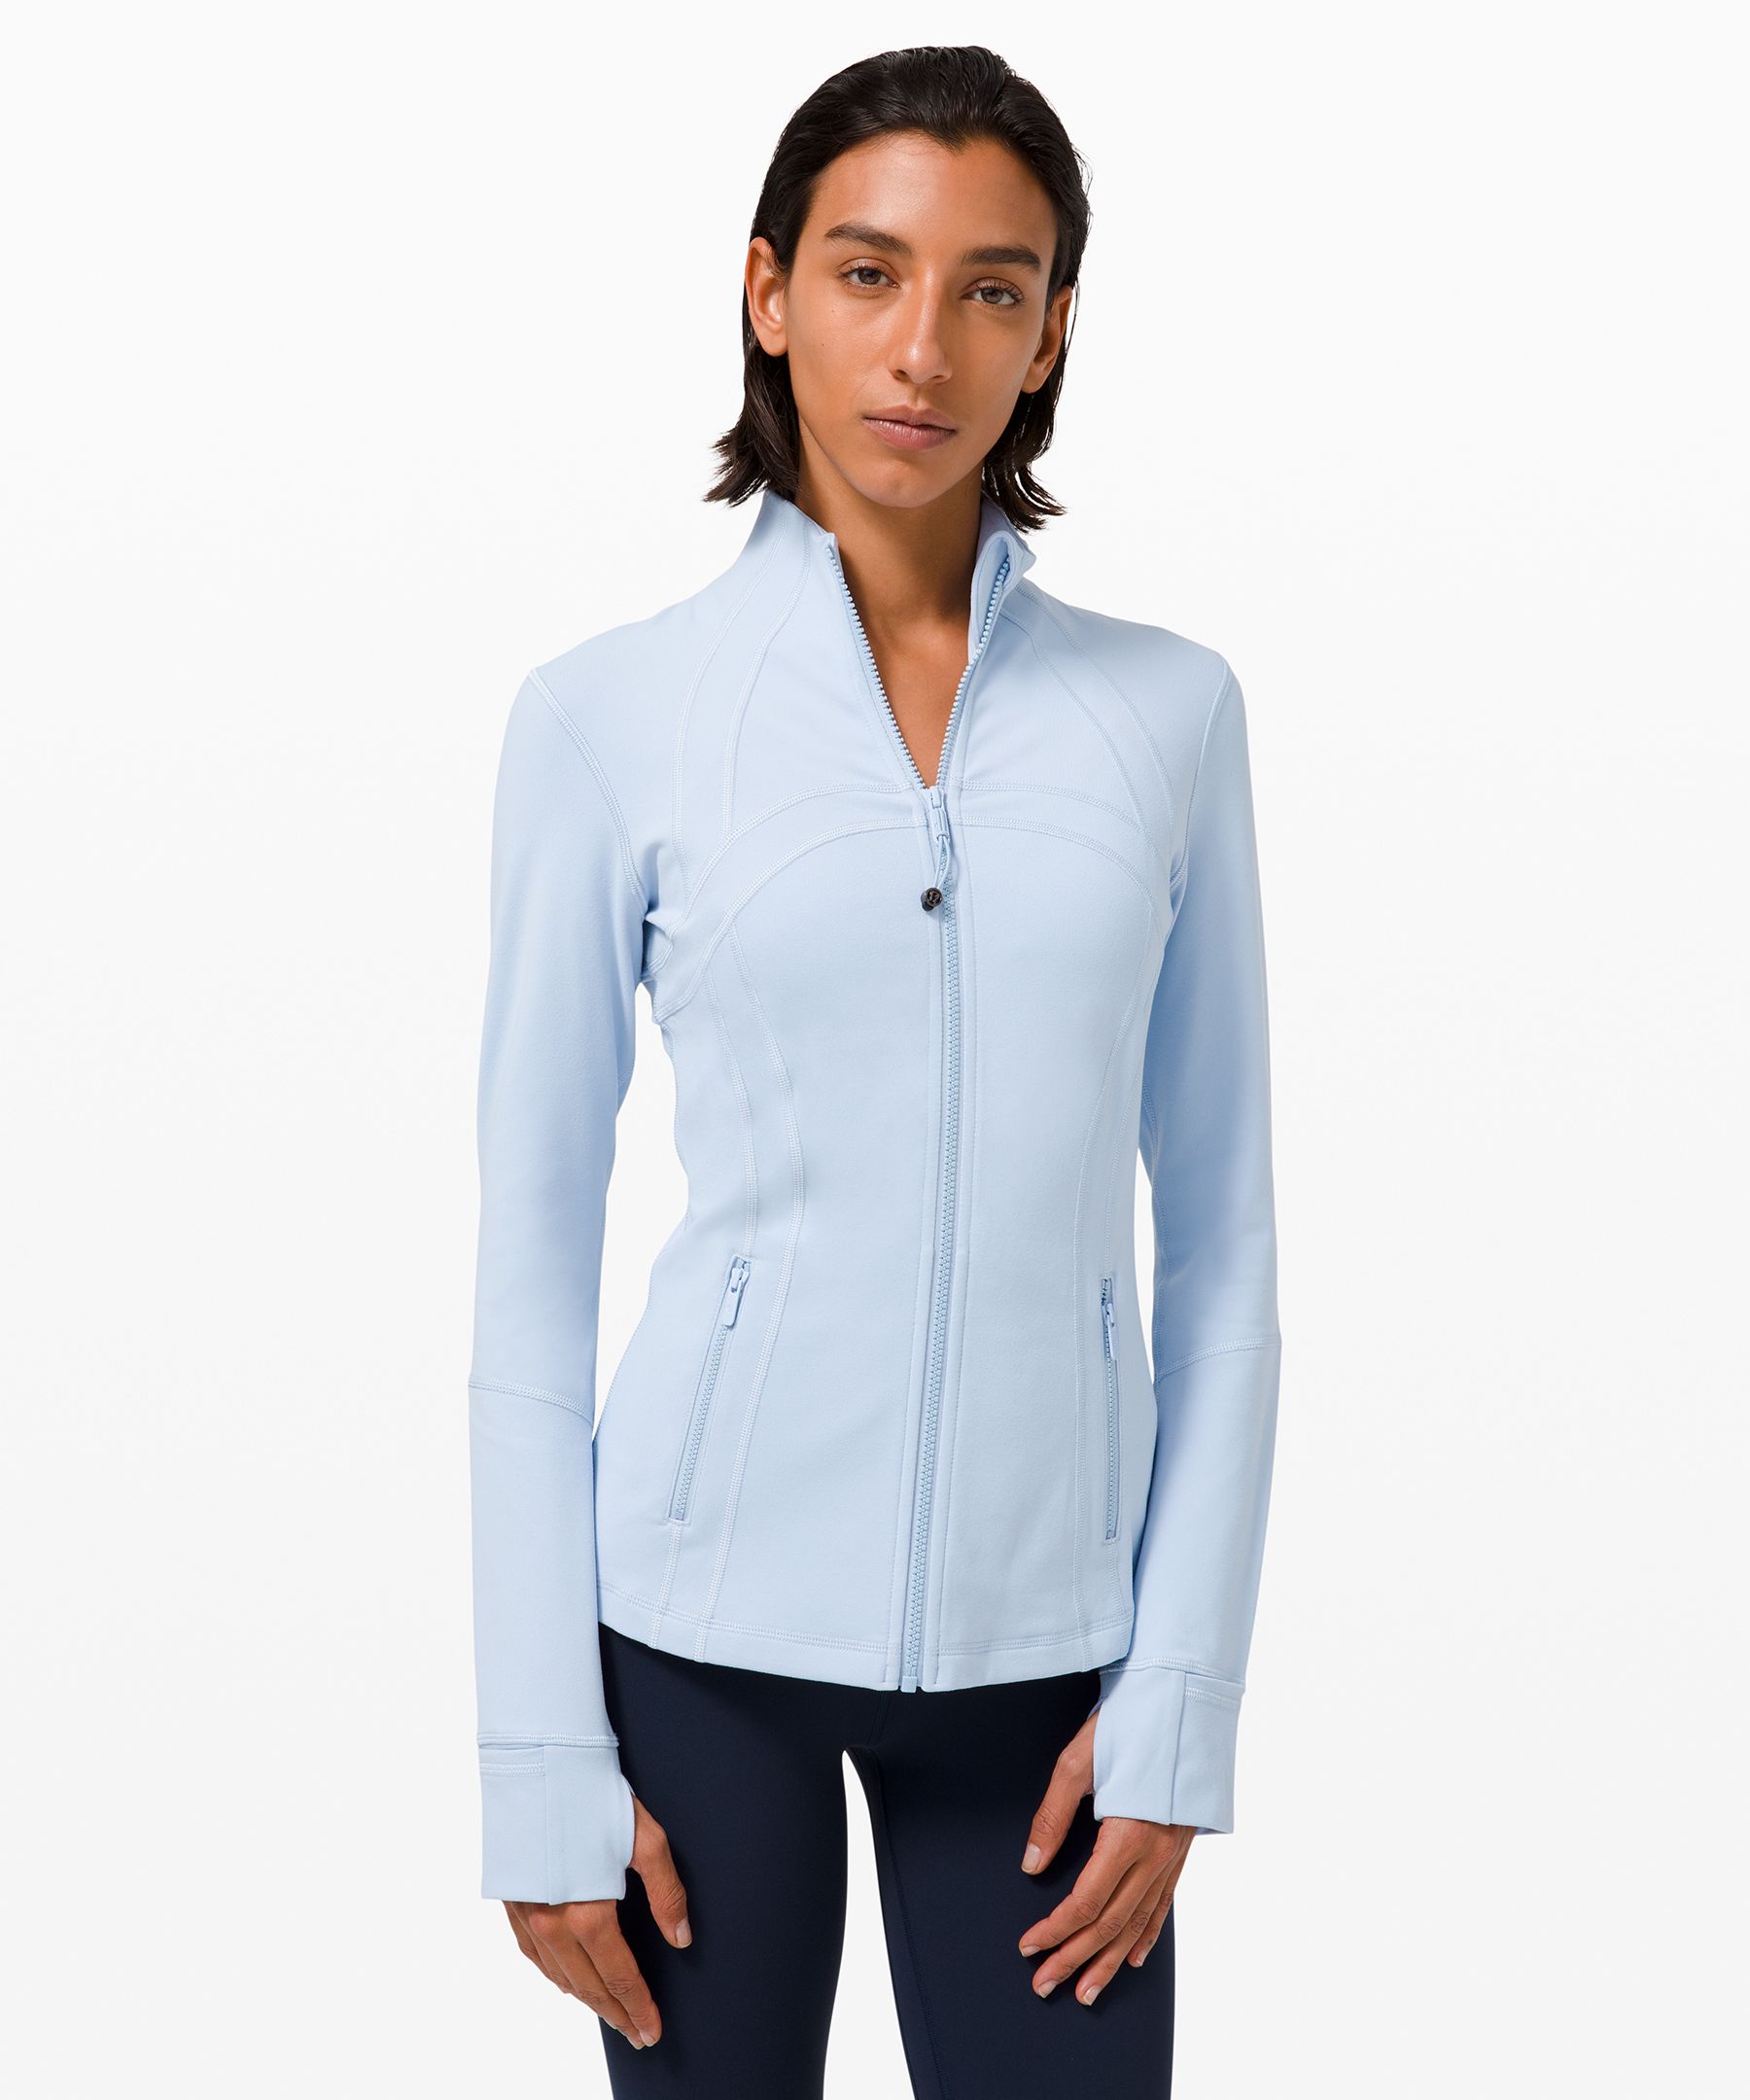 Lululemon Define Jacket Luon In Blue Linen | ModeSens